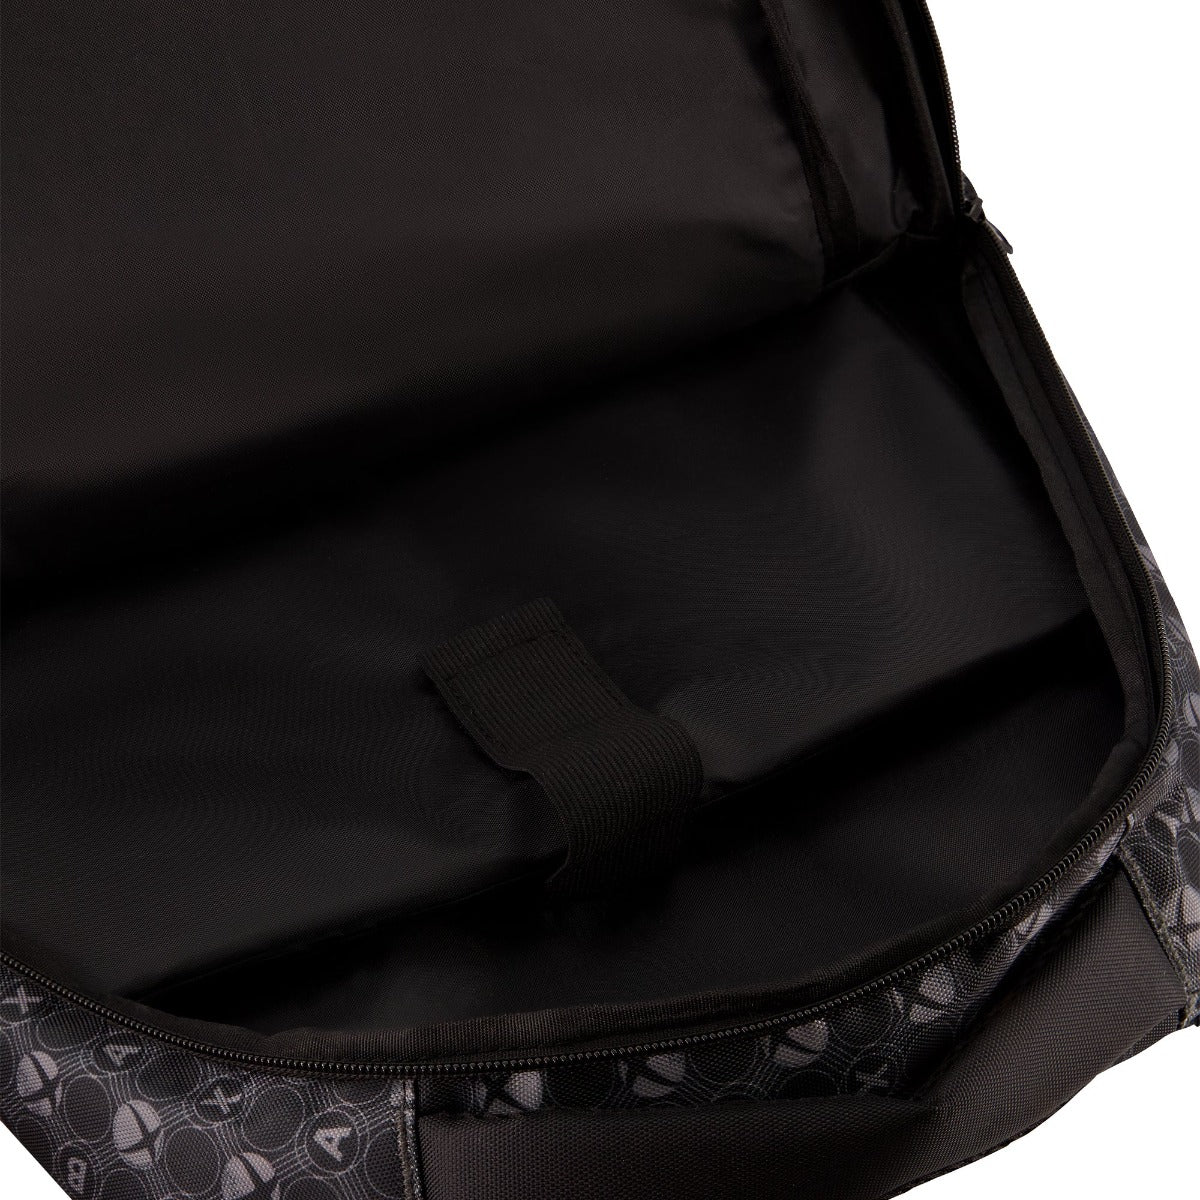 Christian Siriano handbag | Handbag, White handbag, Small crossbody bag